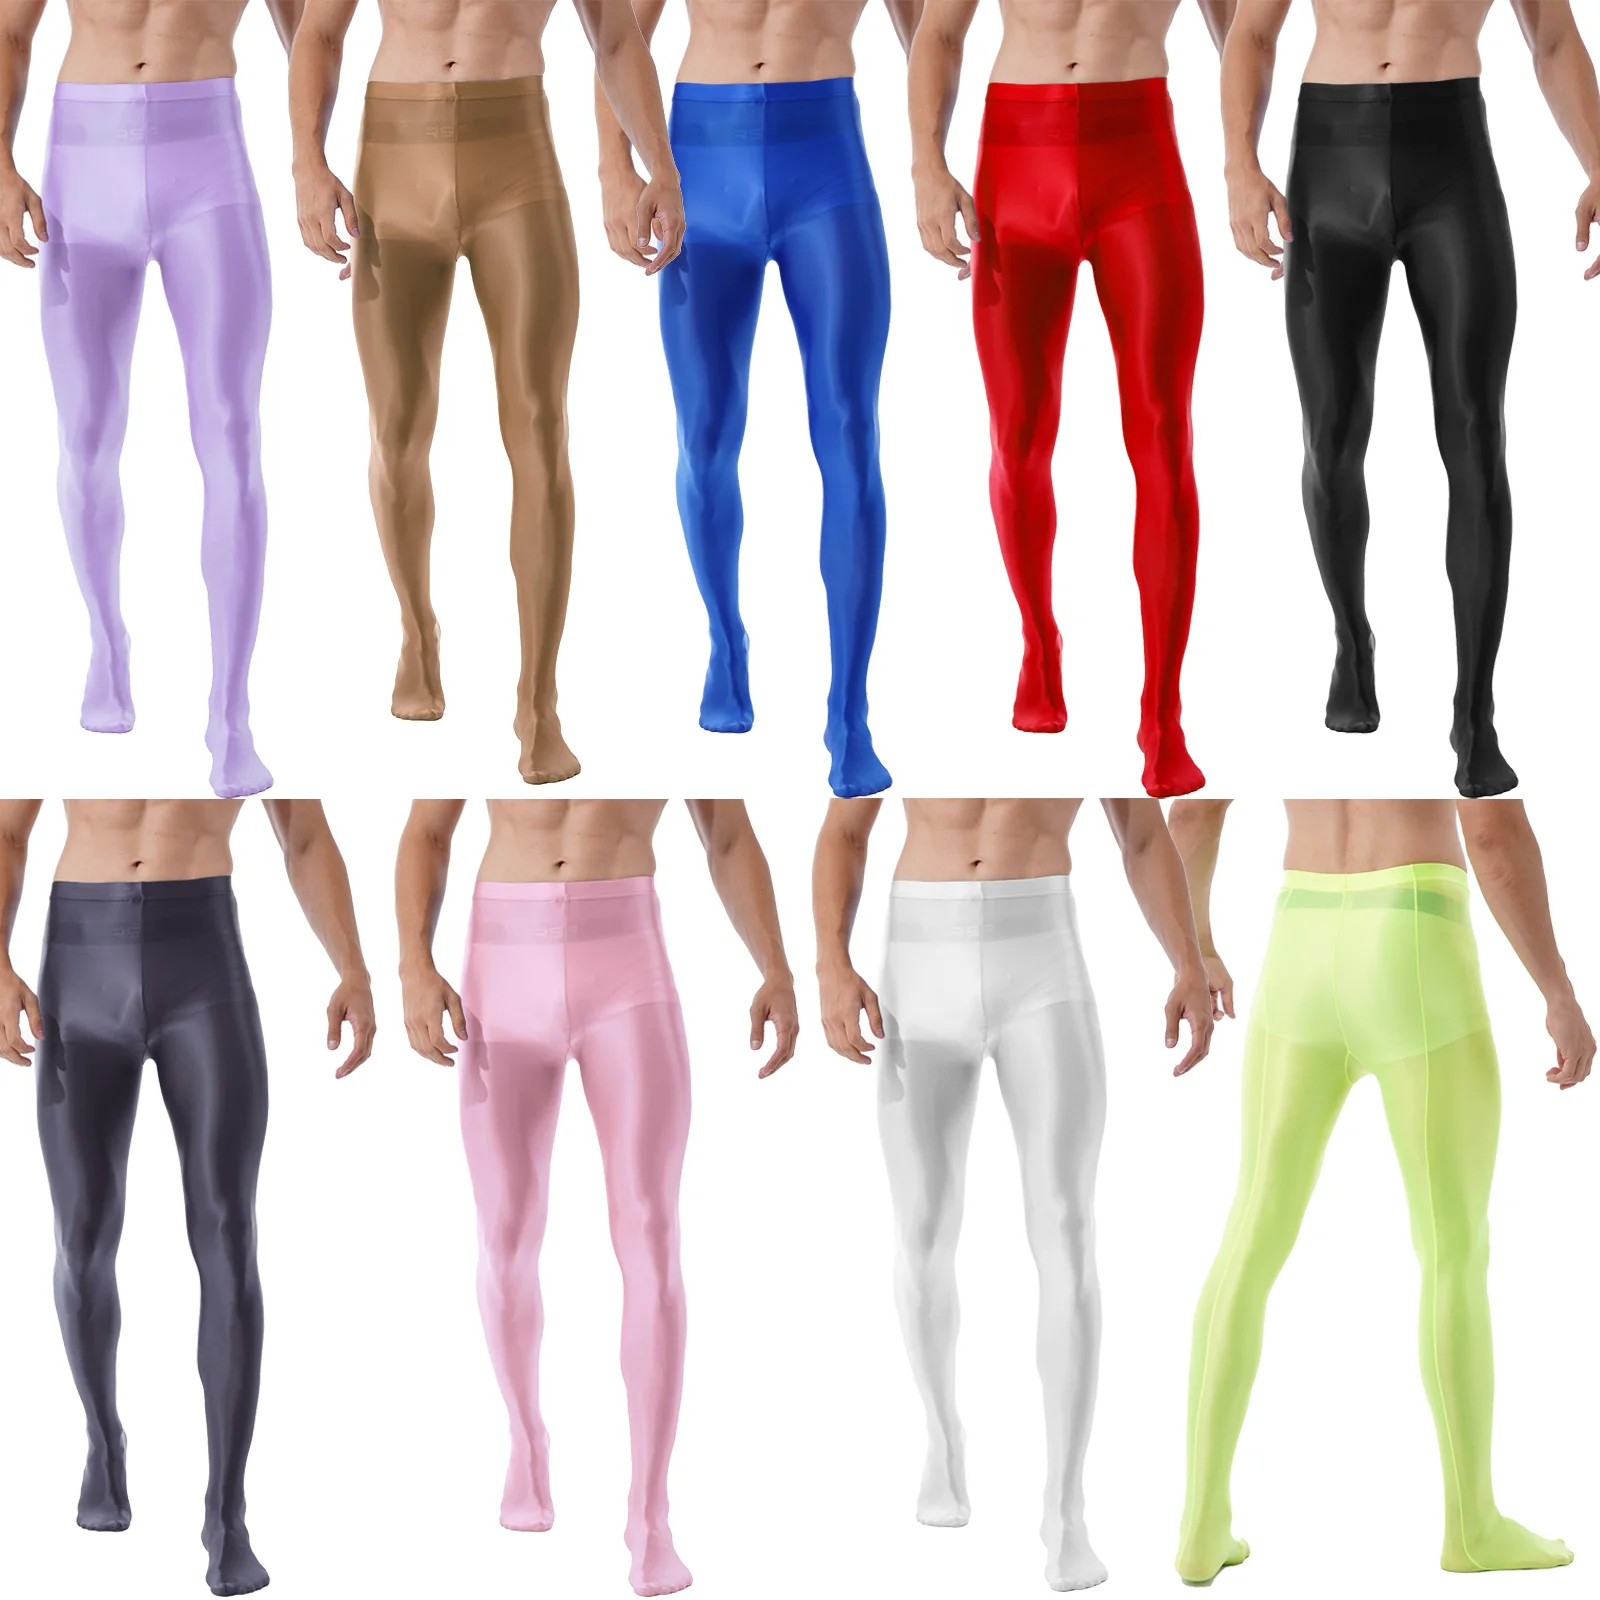 Pants Men Fashion Sheath Glossy Pantyhose Ballet Dance Yoga Leggings Pants Training Fitness Workout Sports Trousers Tights New